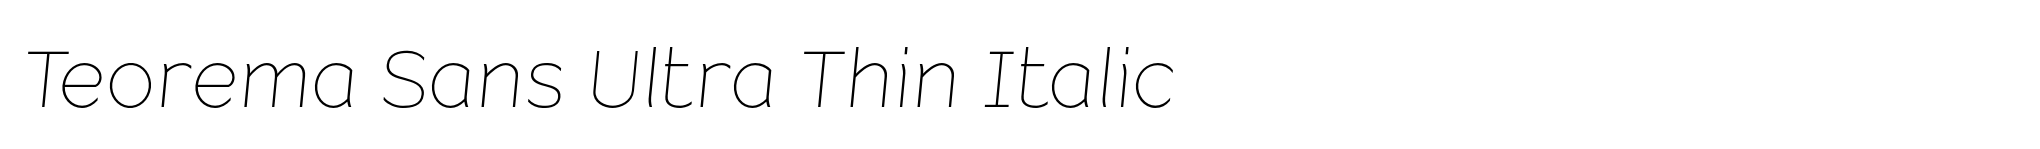 Teorema Sans Ultra Thin Italic image